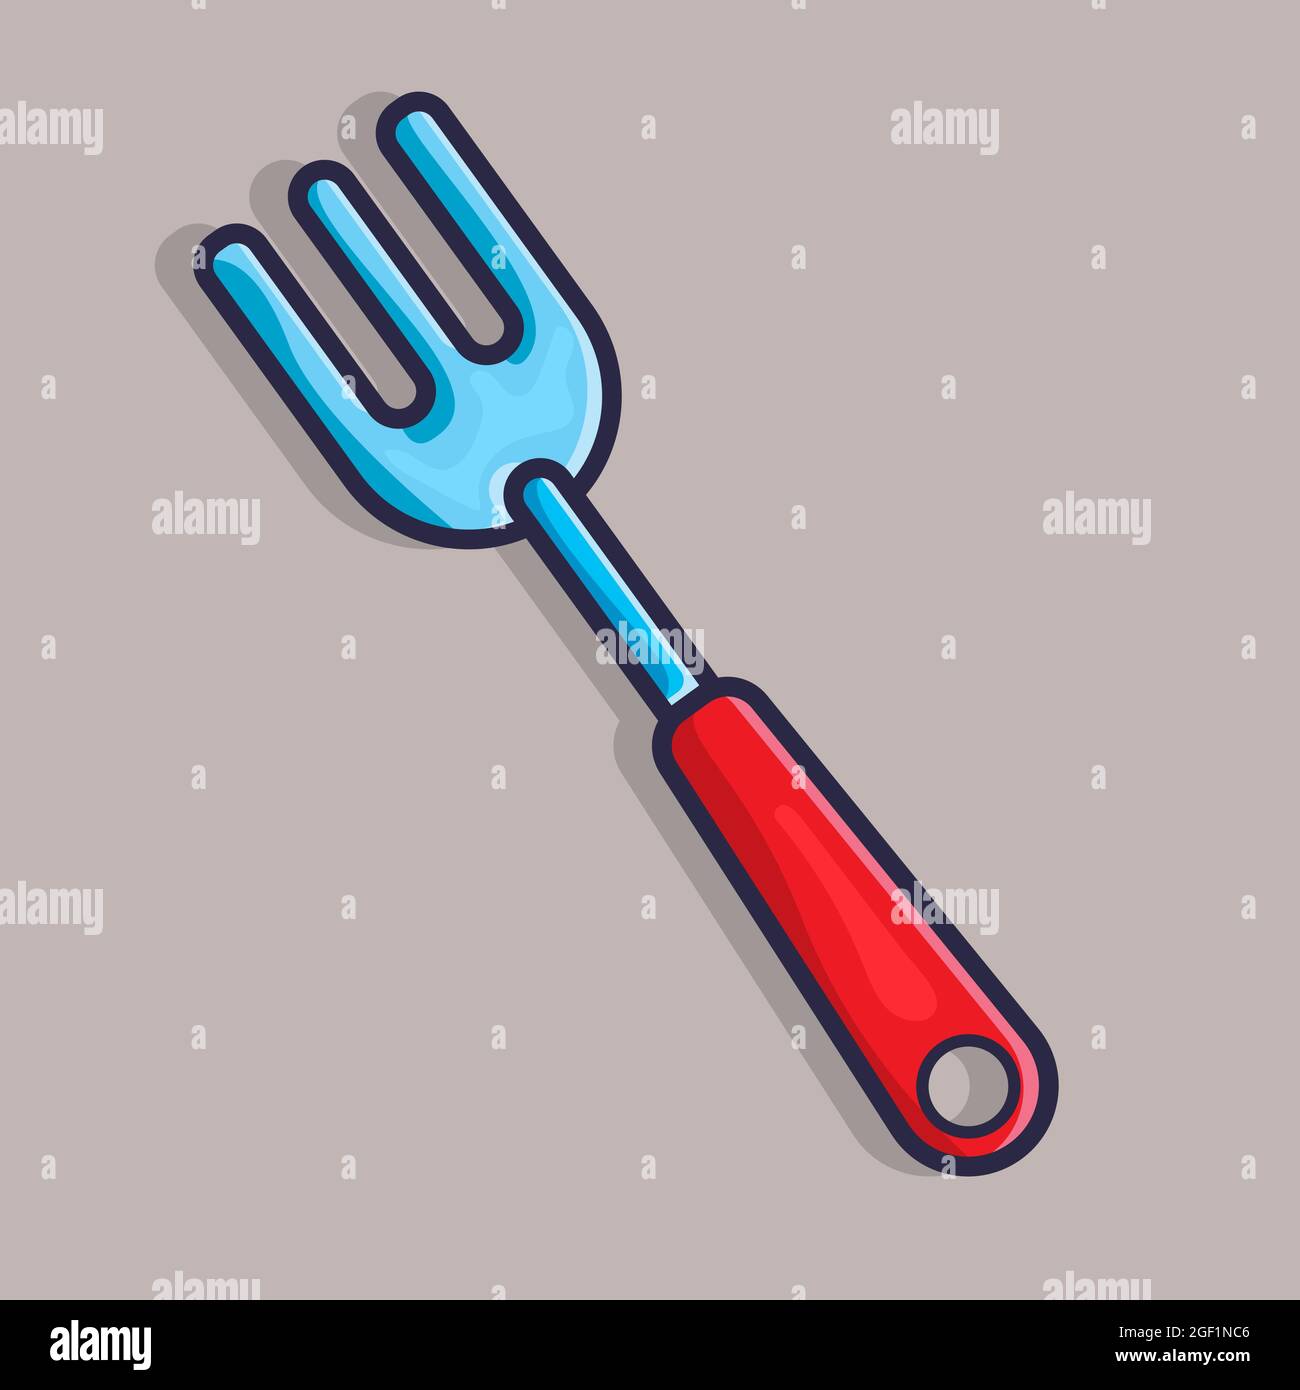 gardening fork tool isolated cartoon vector illustration in flat style Stock Vector